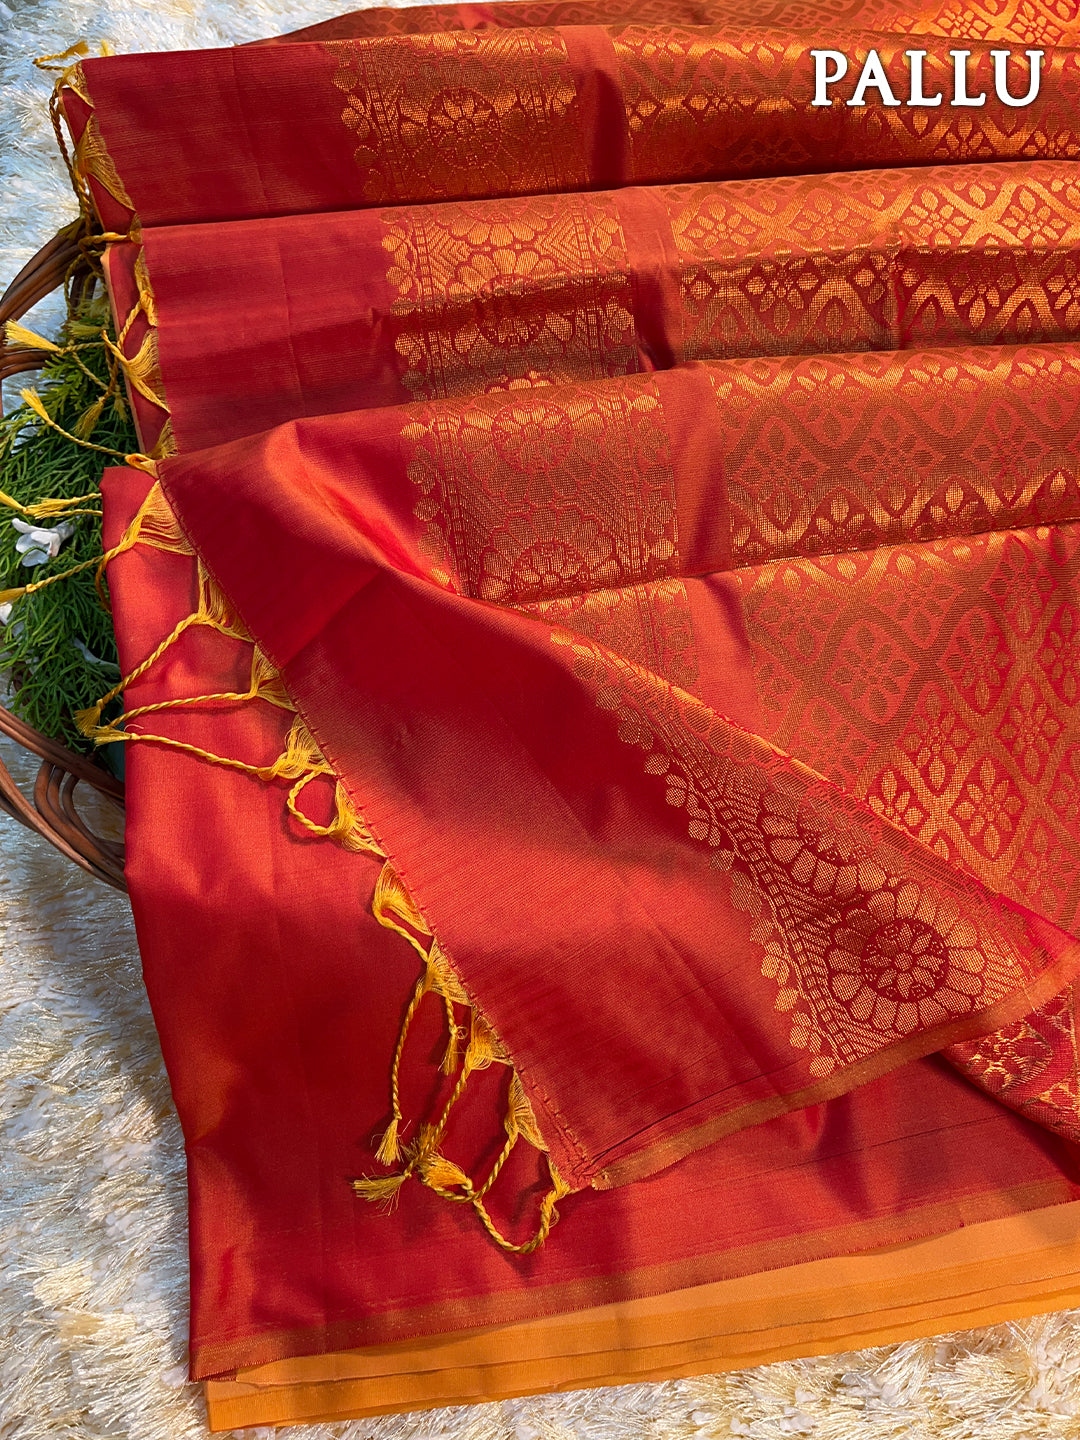 Dual color of orange and maroon kanchipuram semi soft silk saree